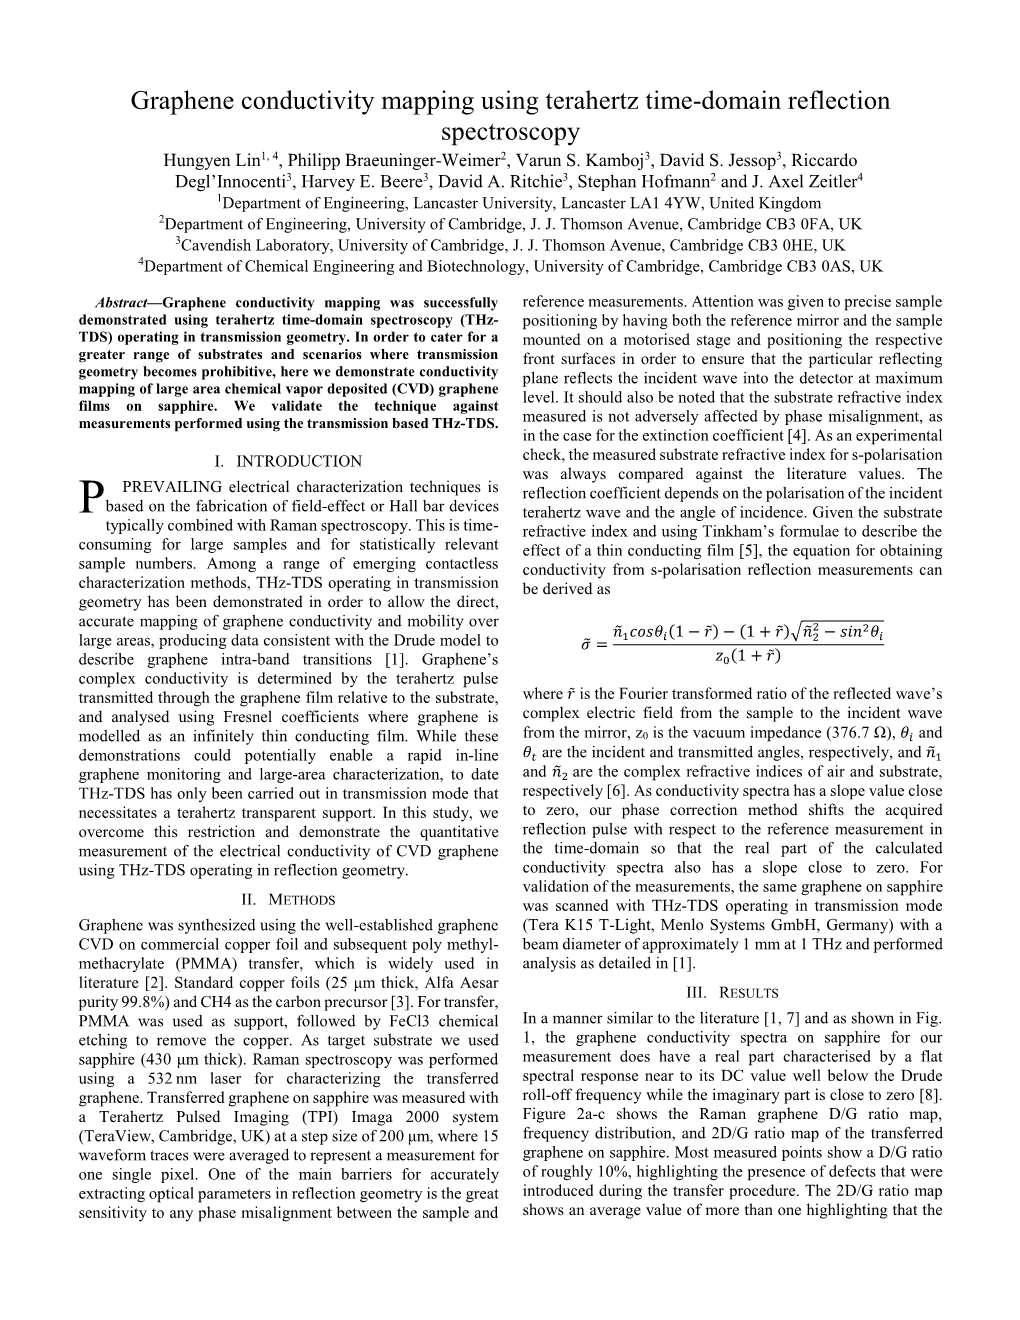 Graphene Conductivity Mapping Using Terahertz Time-Domain Reflection Spectroscopy Hungyen Lin1, 4, Philipp Braeuninger-Weimer2, Varun S